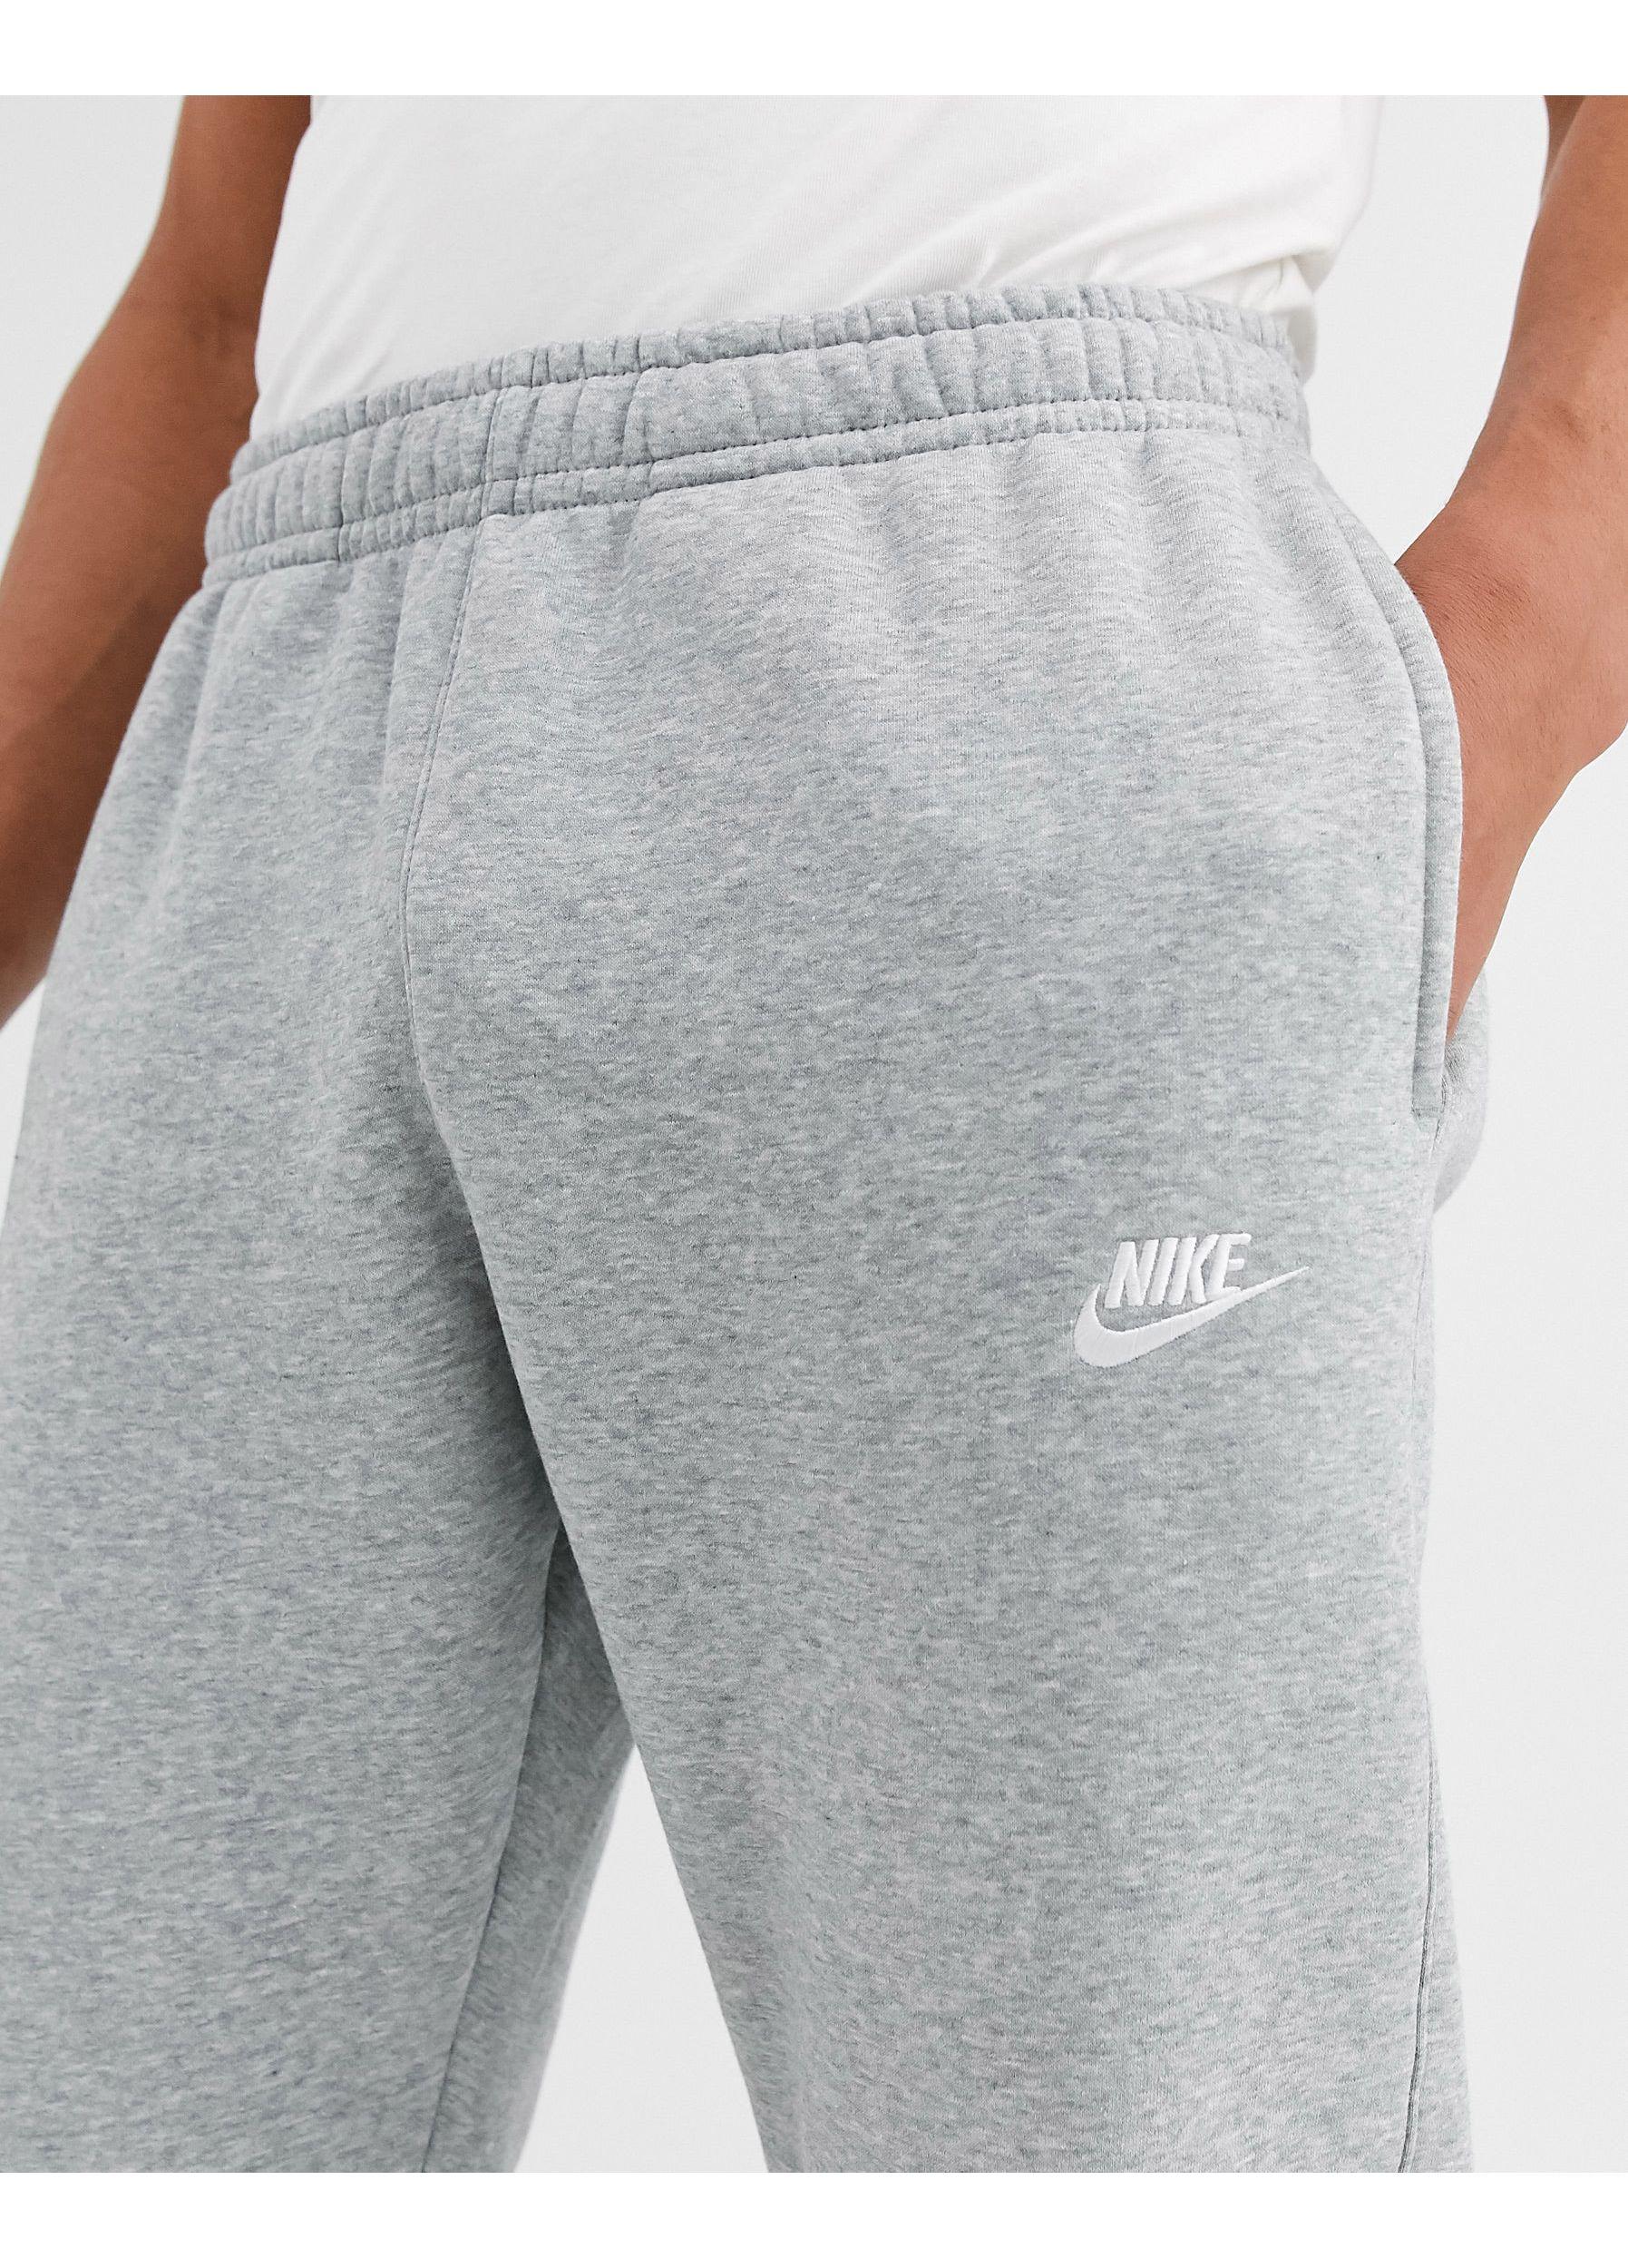 Nike Cotton Cuffed Club Trackies in Grey (Grey) for Men - Save 45% - Lyst